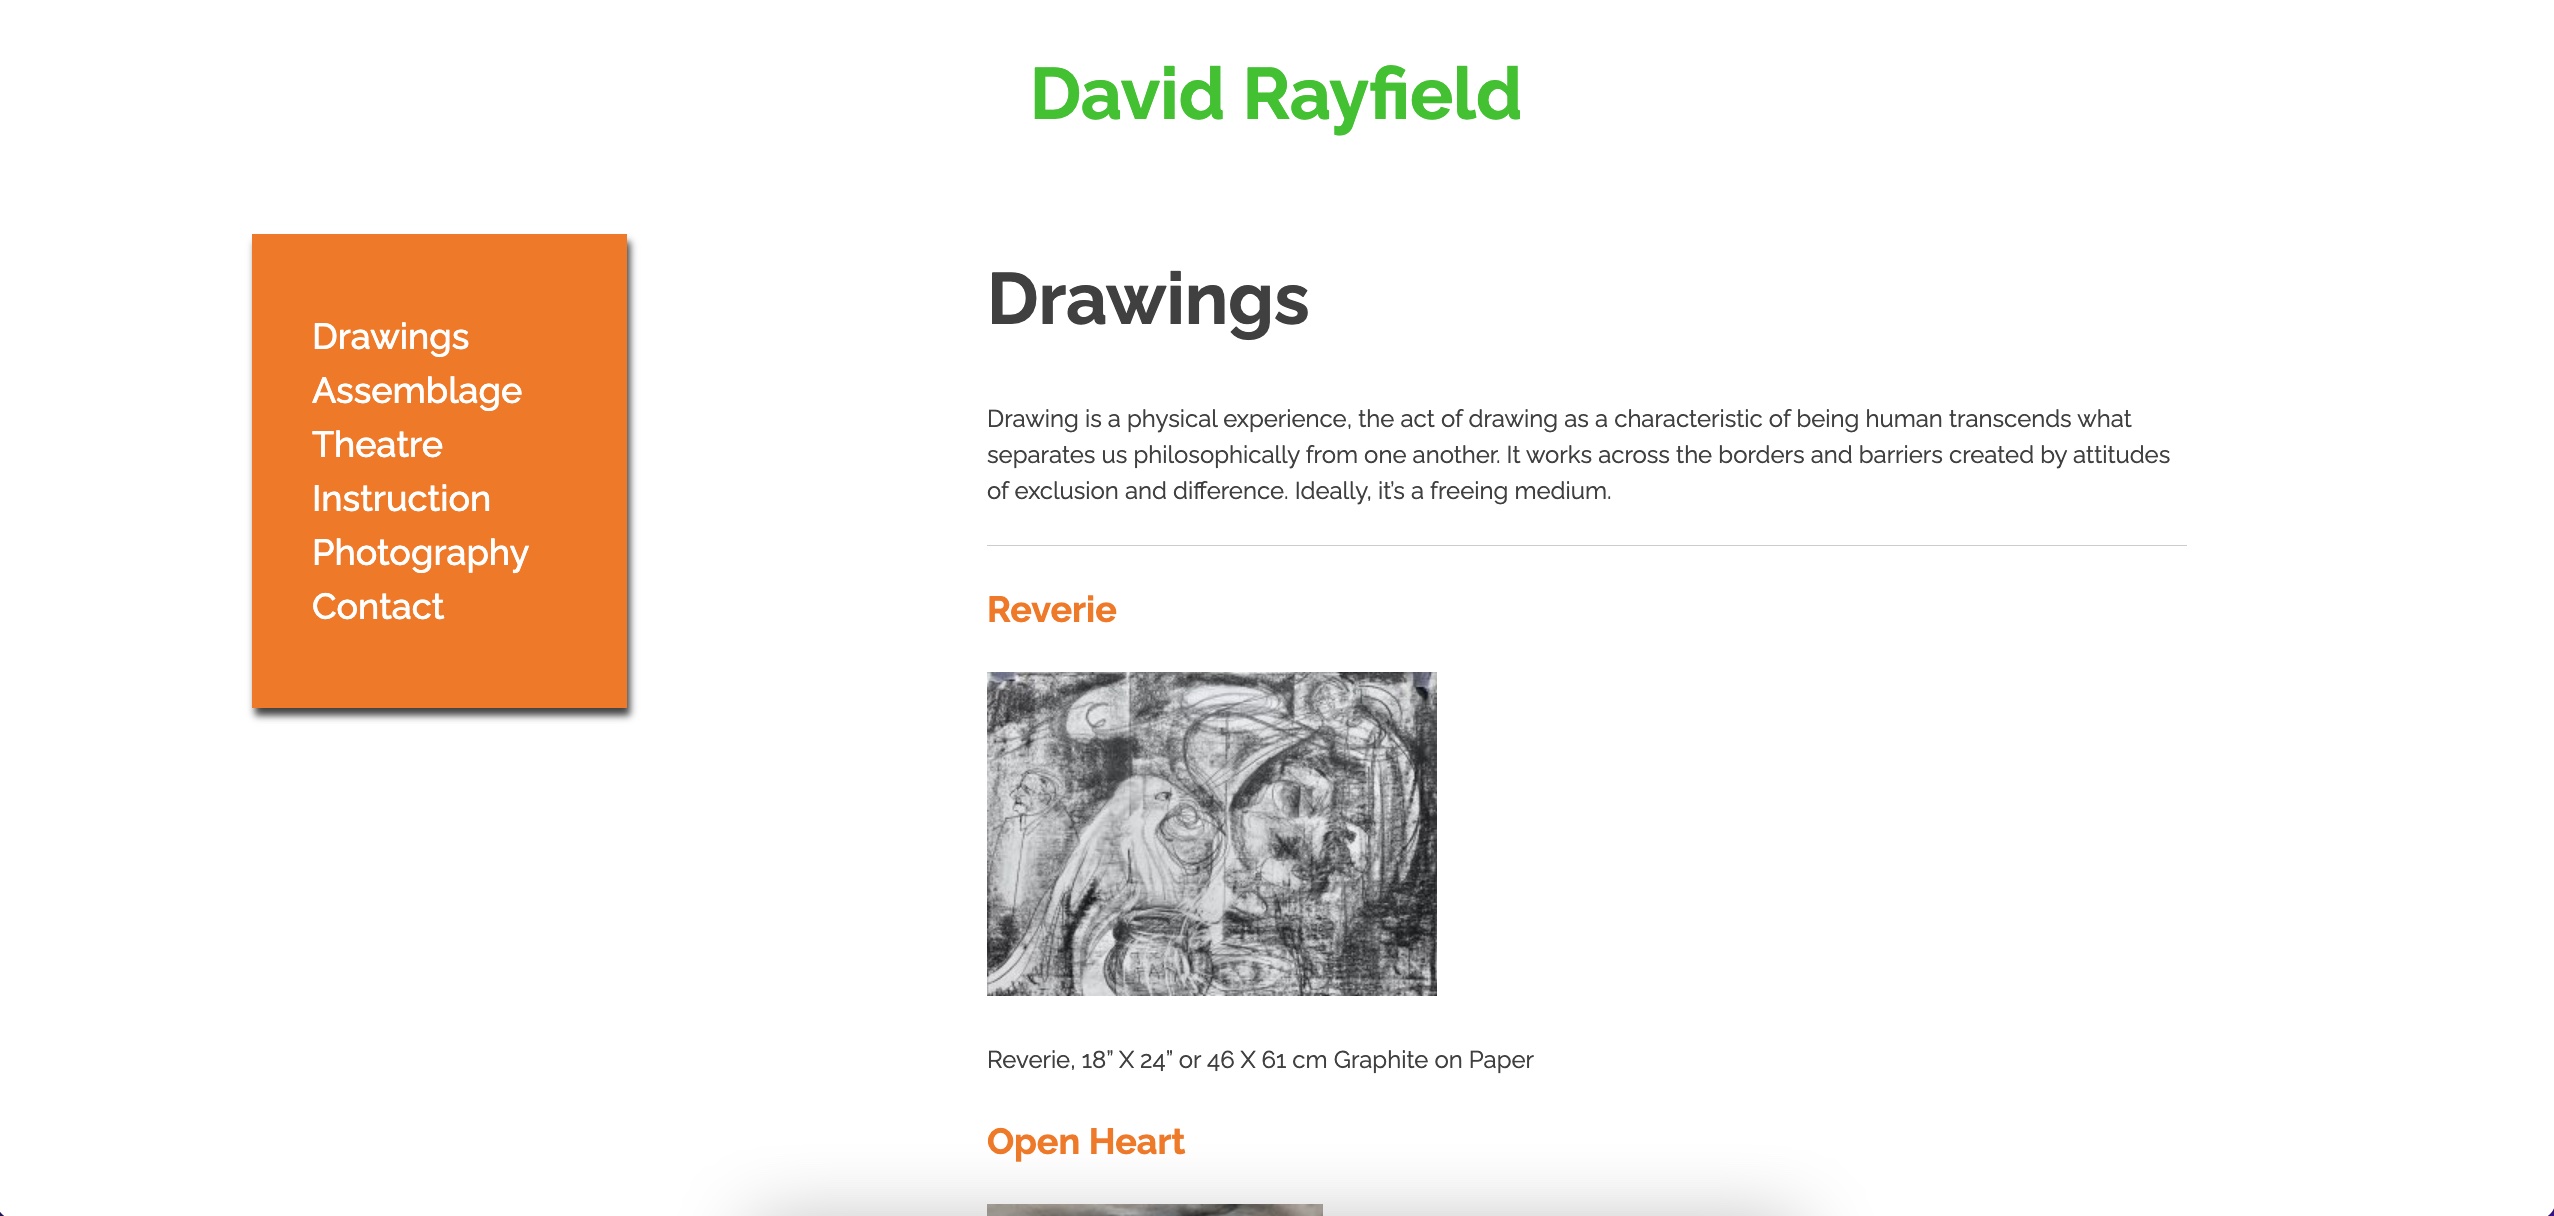 david's drawings page